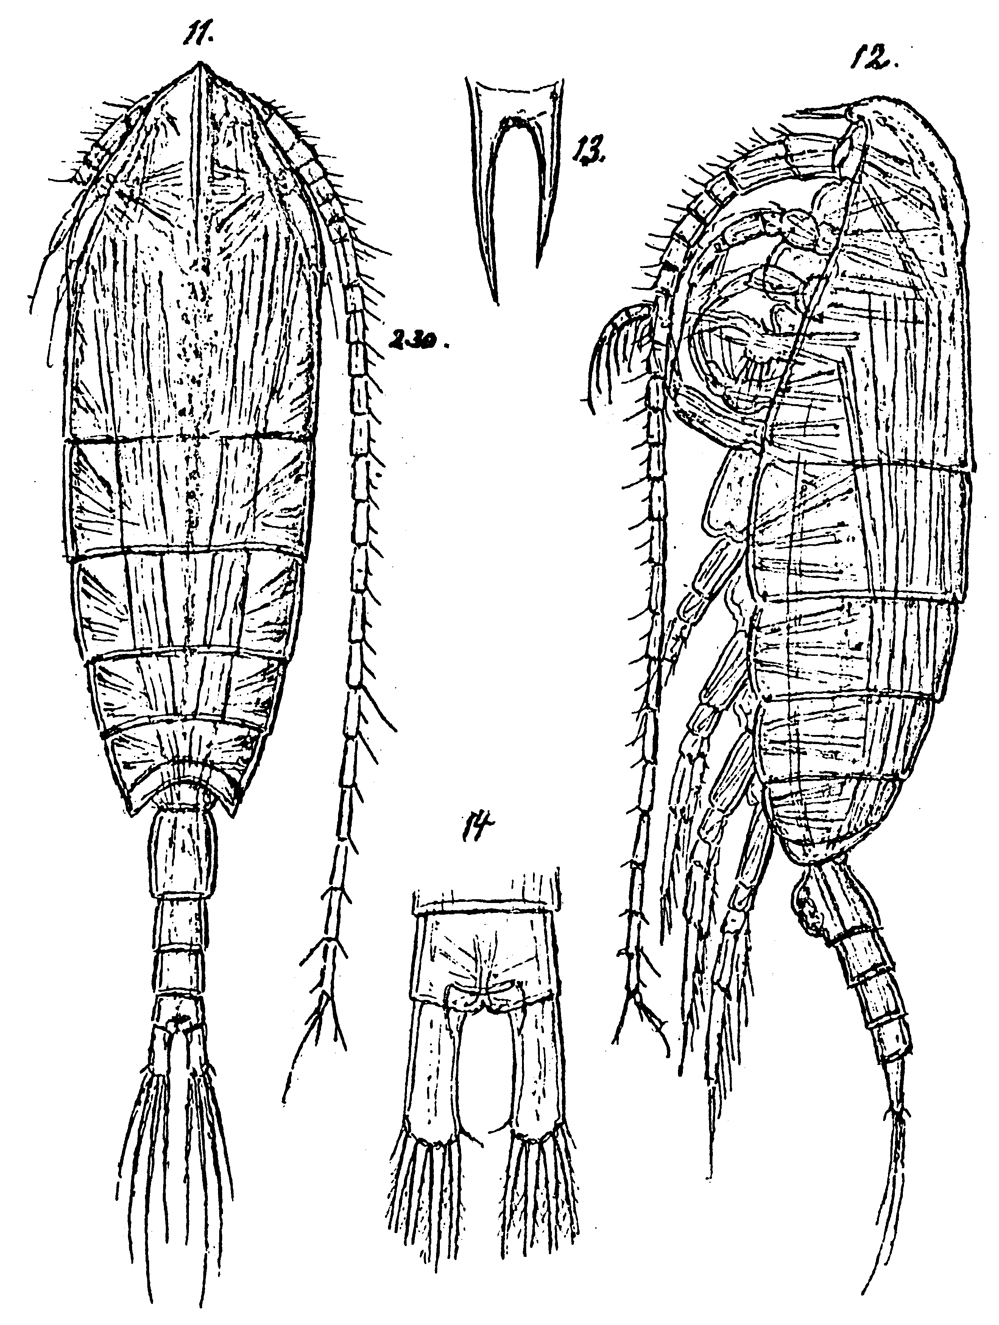 Species Monacilla tenera - Plate 2 of morphological figures